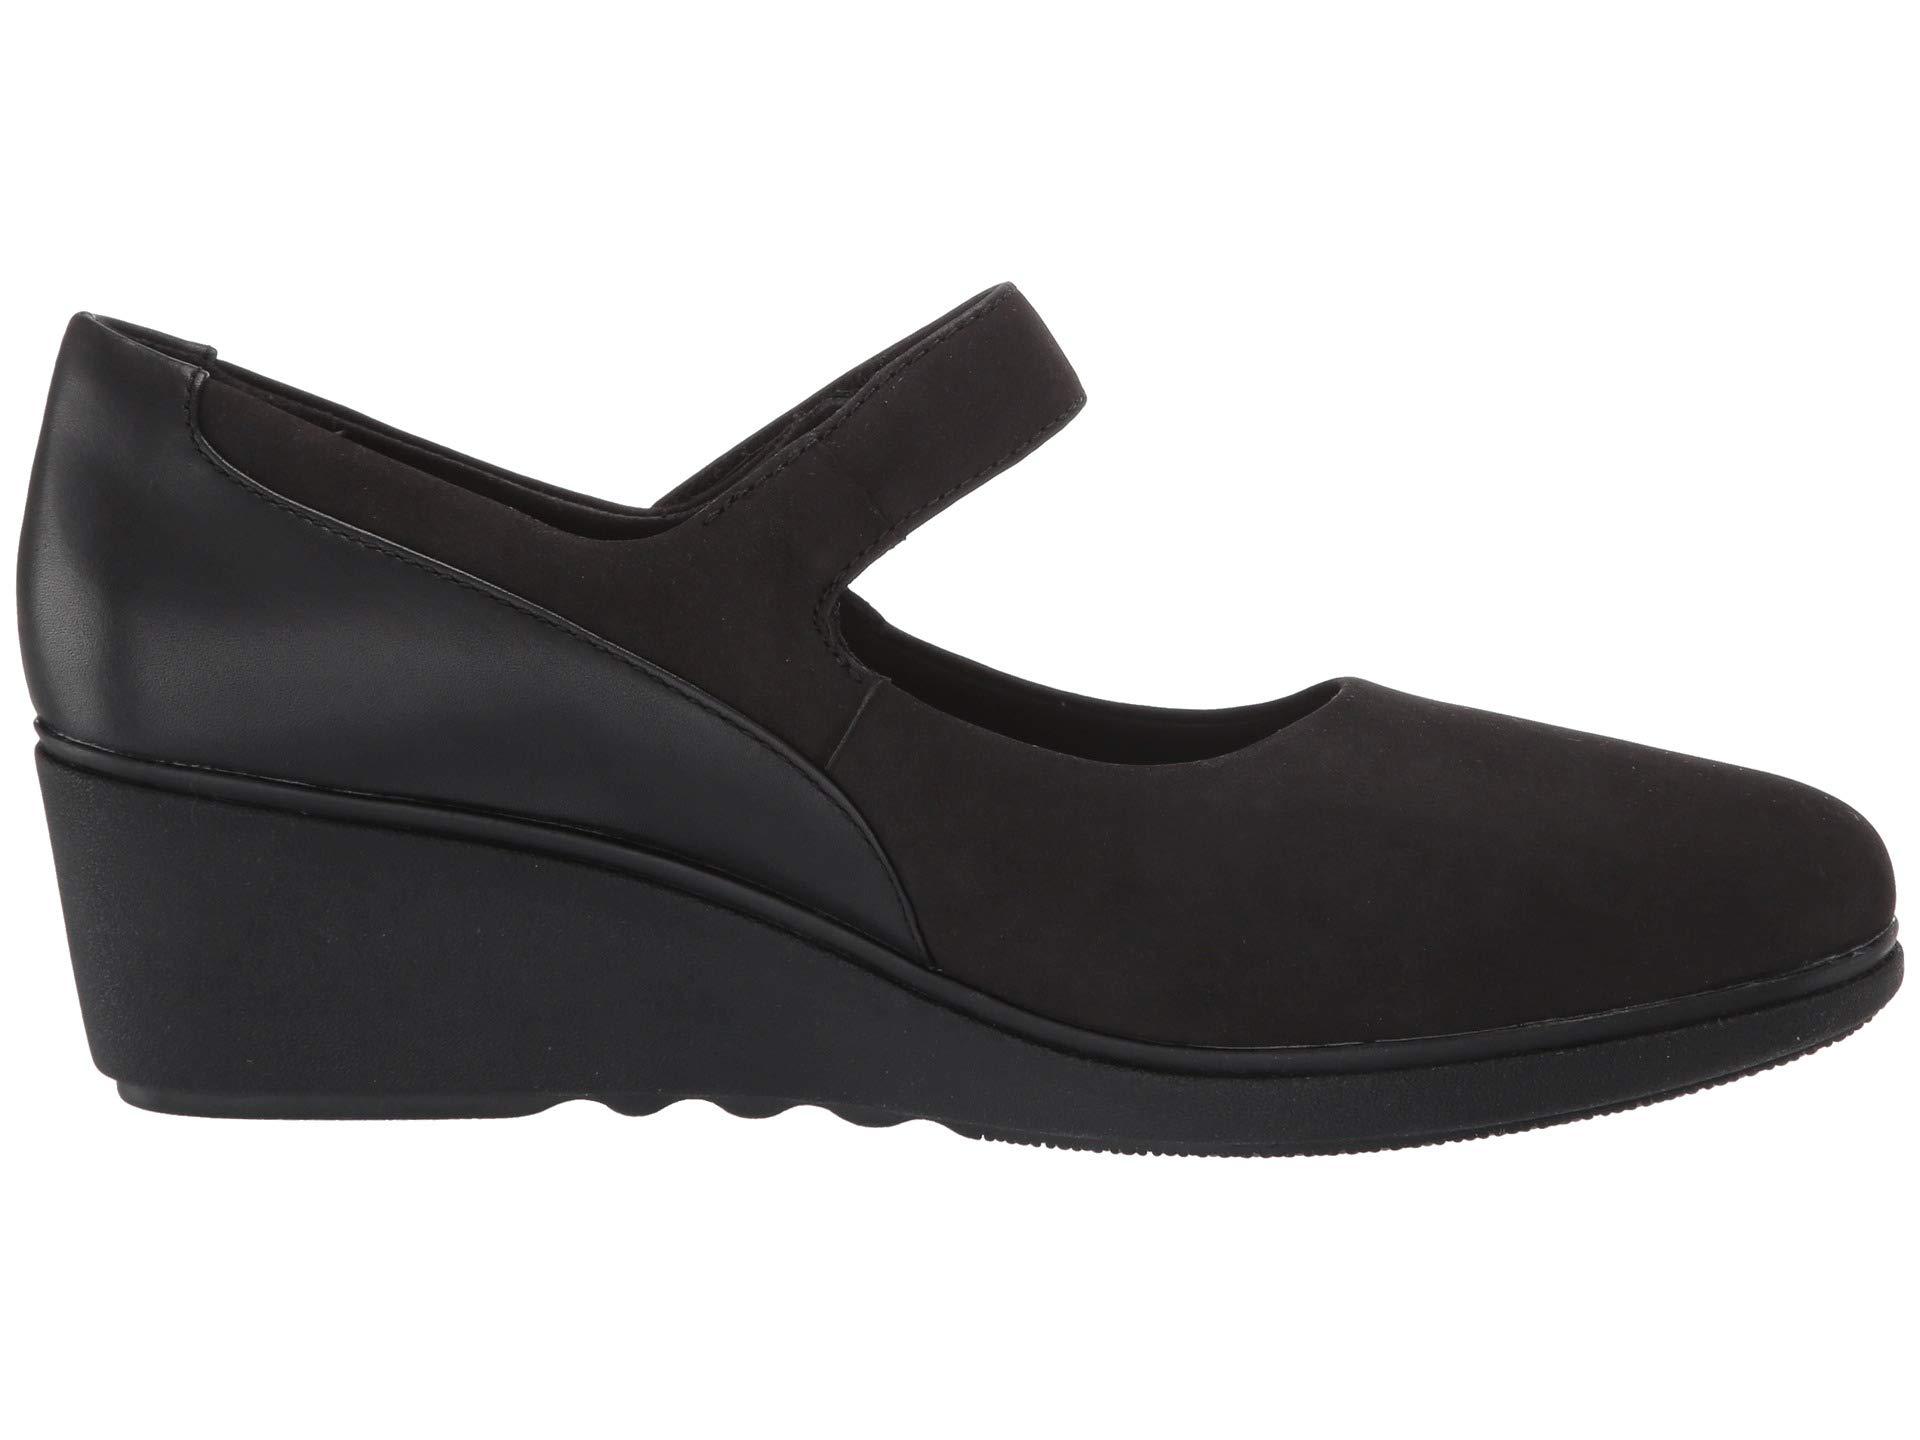 Clarks Leather Un Tallara Ivy Womens Wedge Heel Shoes in Black - Lyst